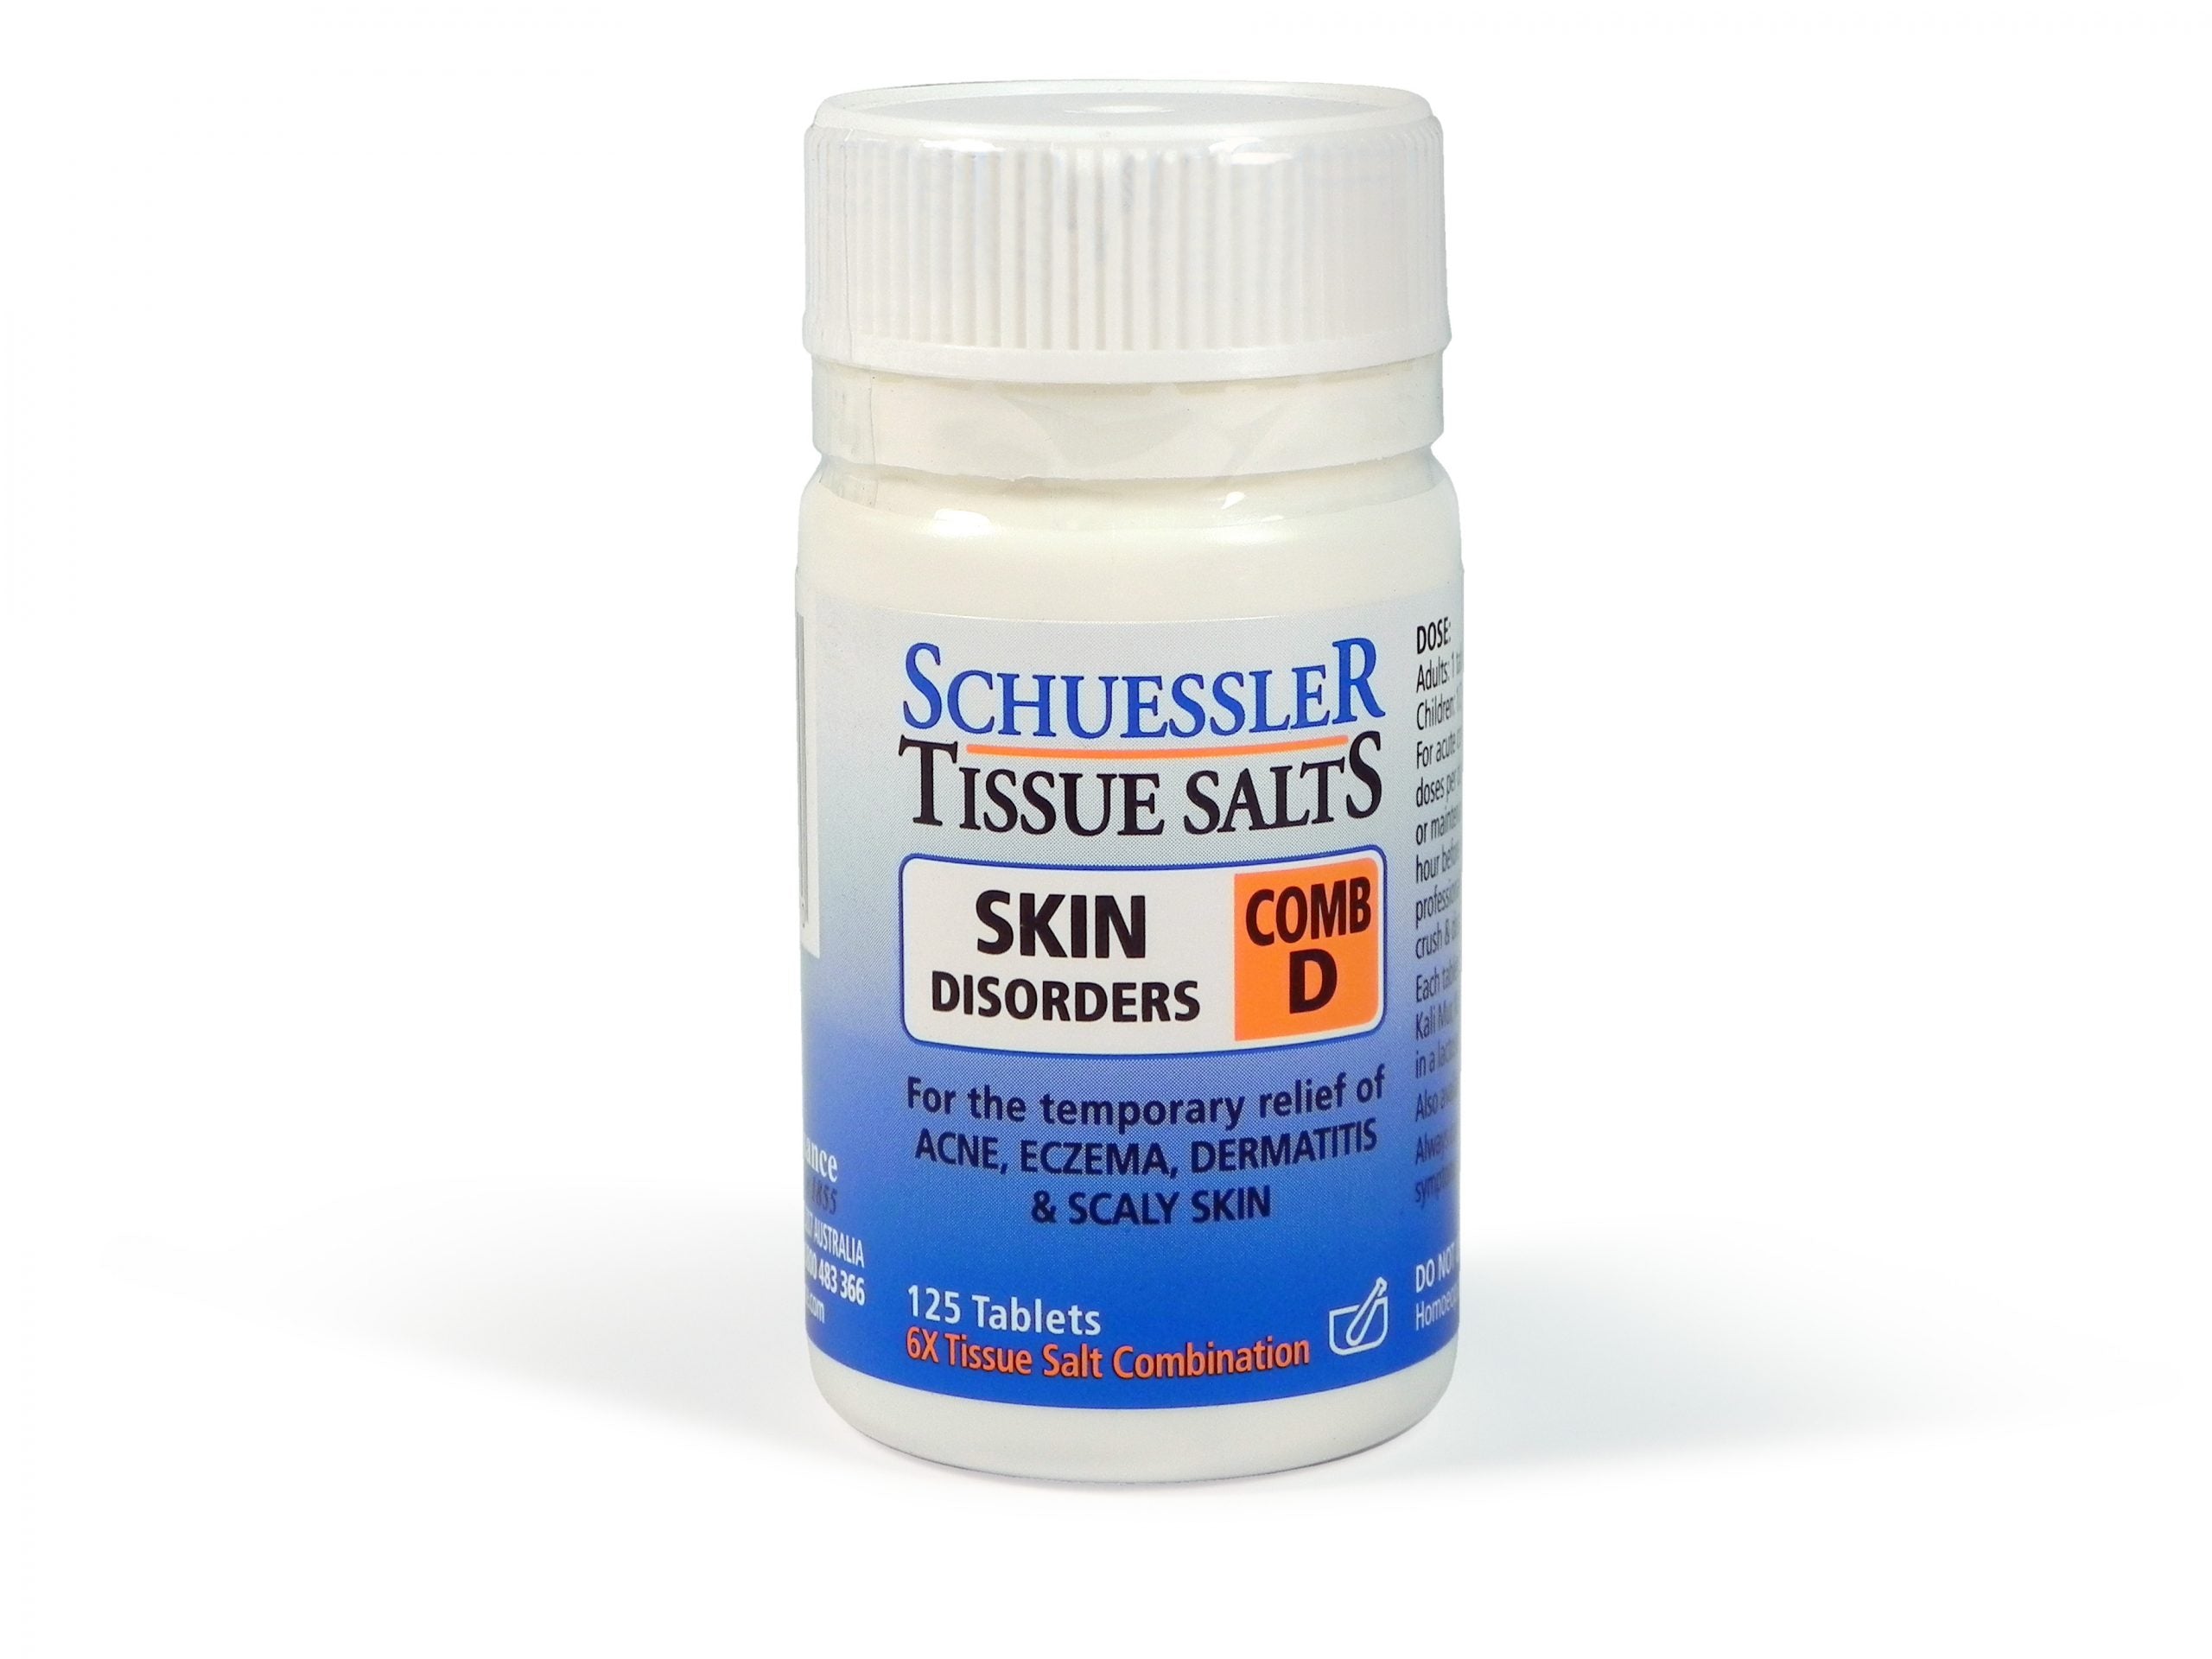 M&P Schuessler Tissue Salts Combination D Skin Disorders 125 Tablets